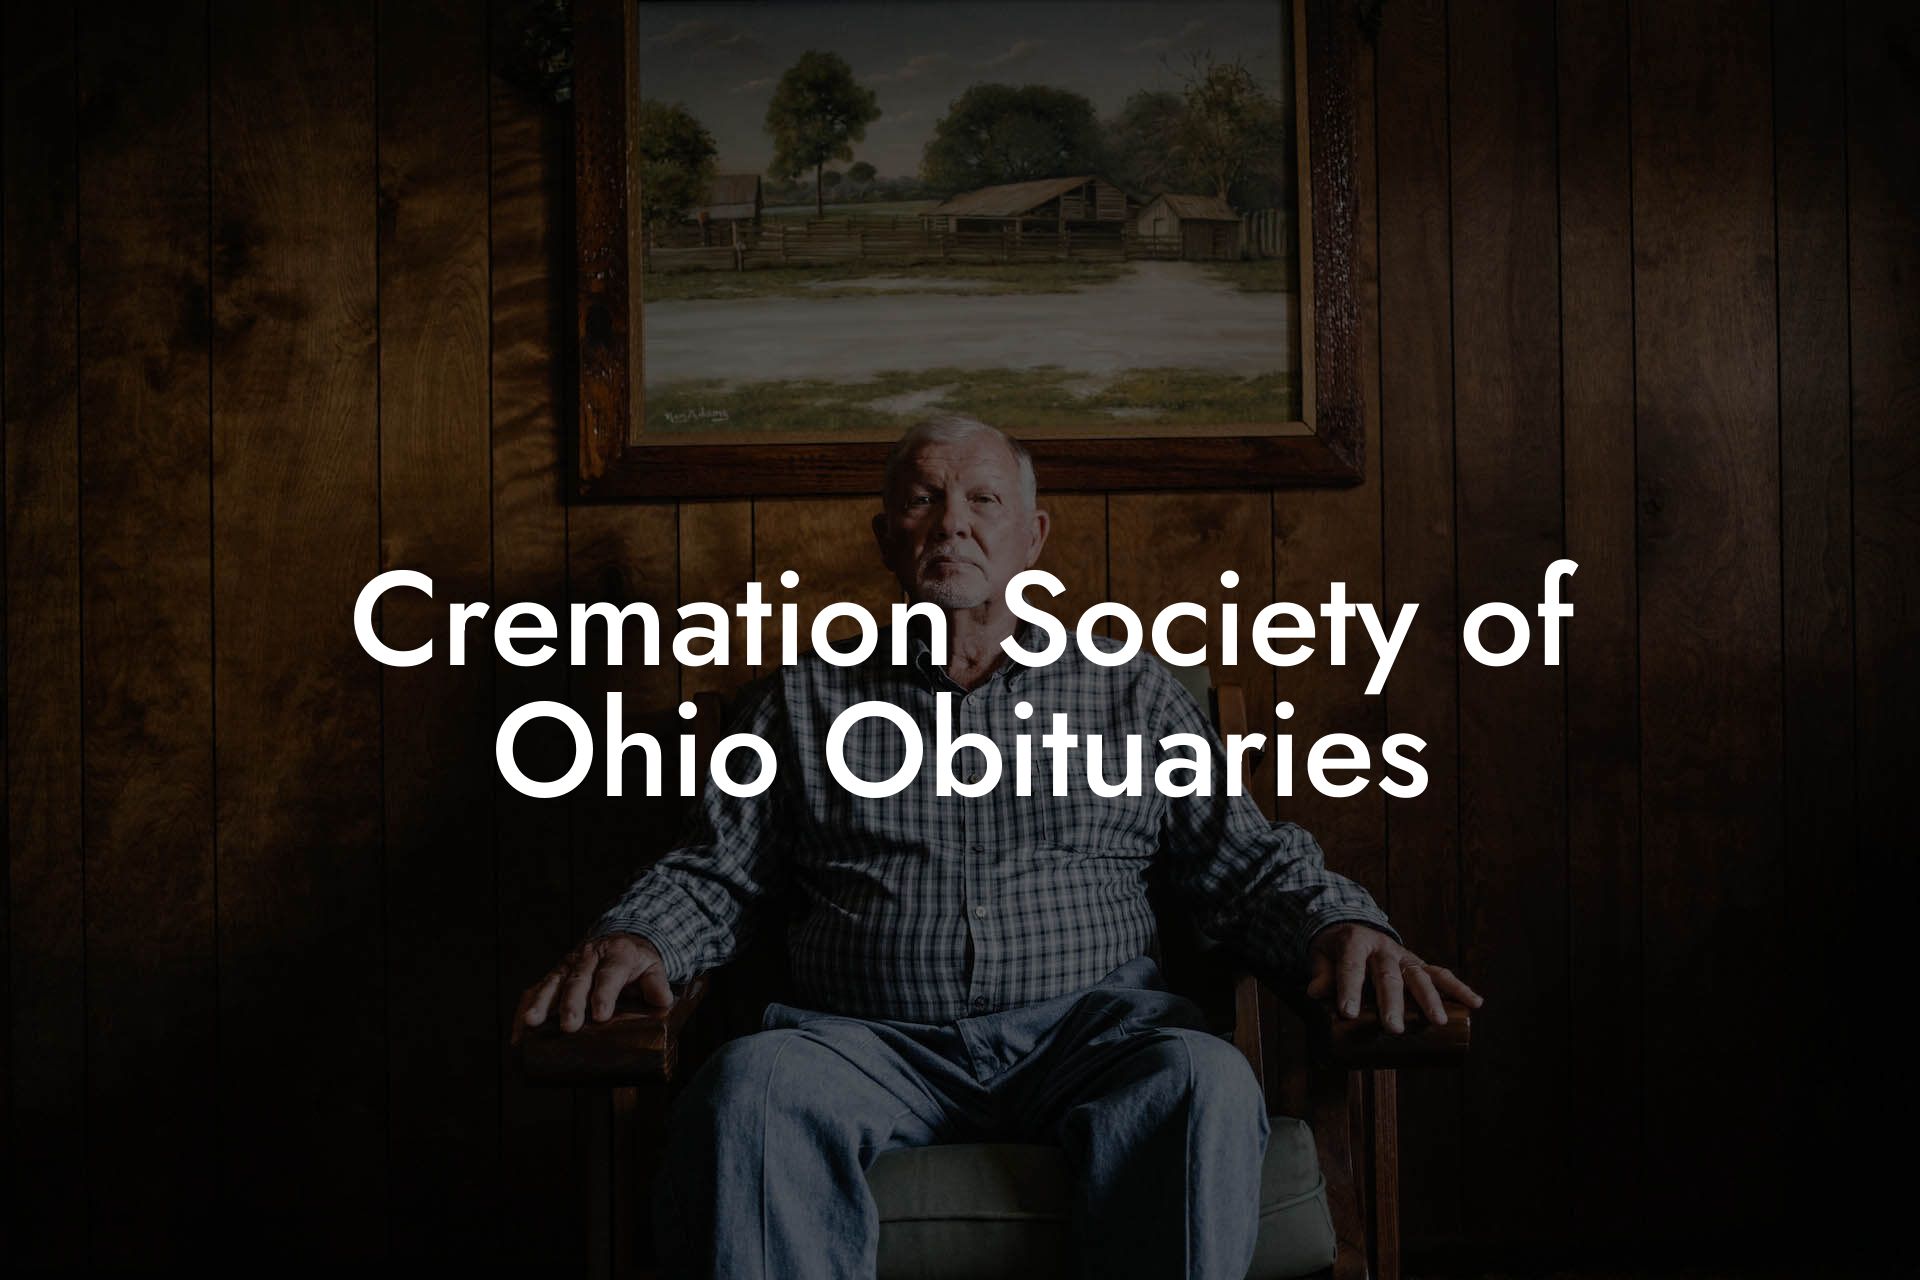 Cremation Society of Ohio Obituaries